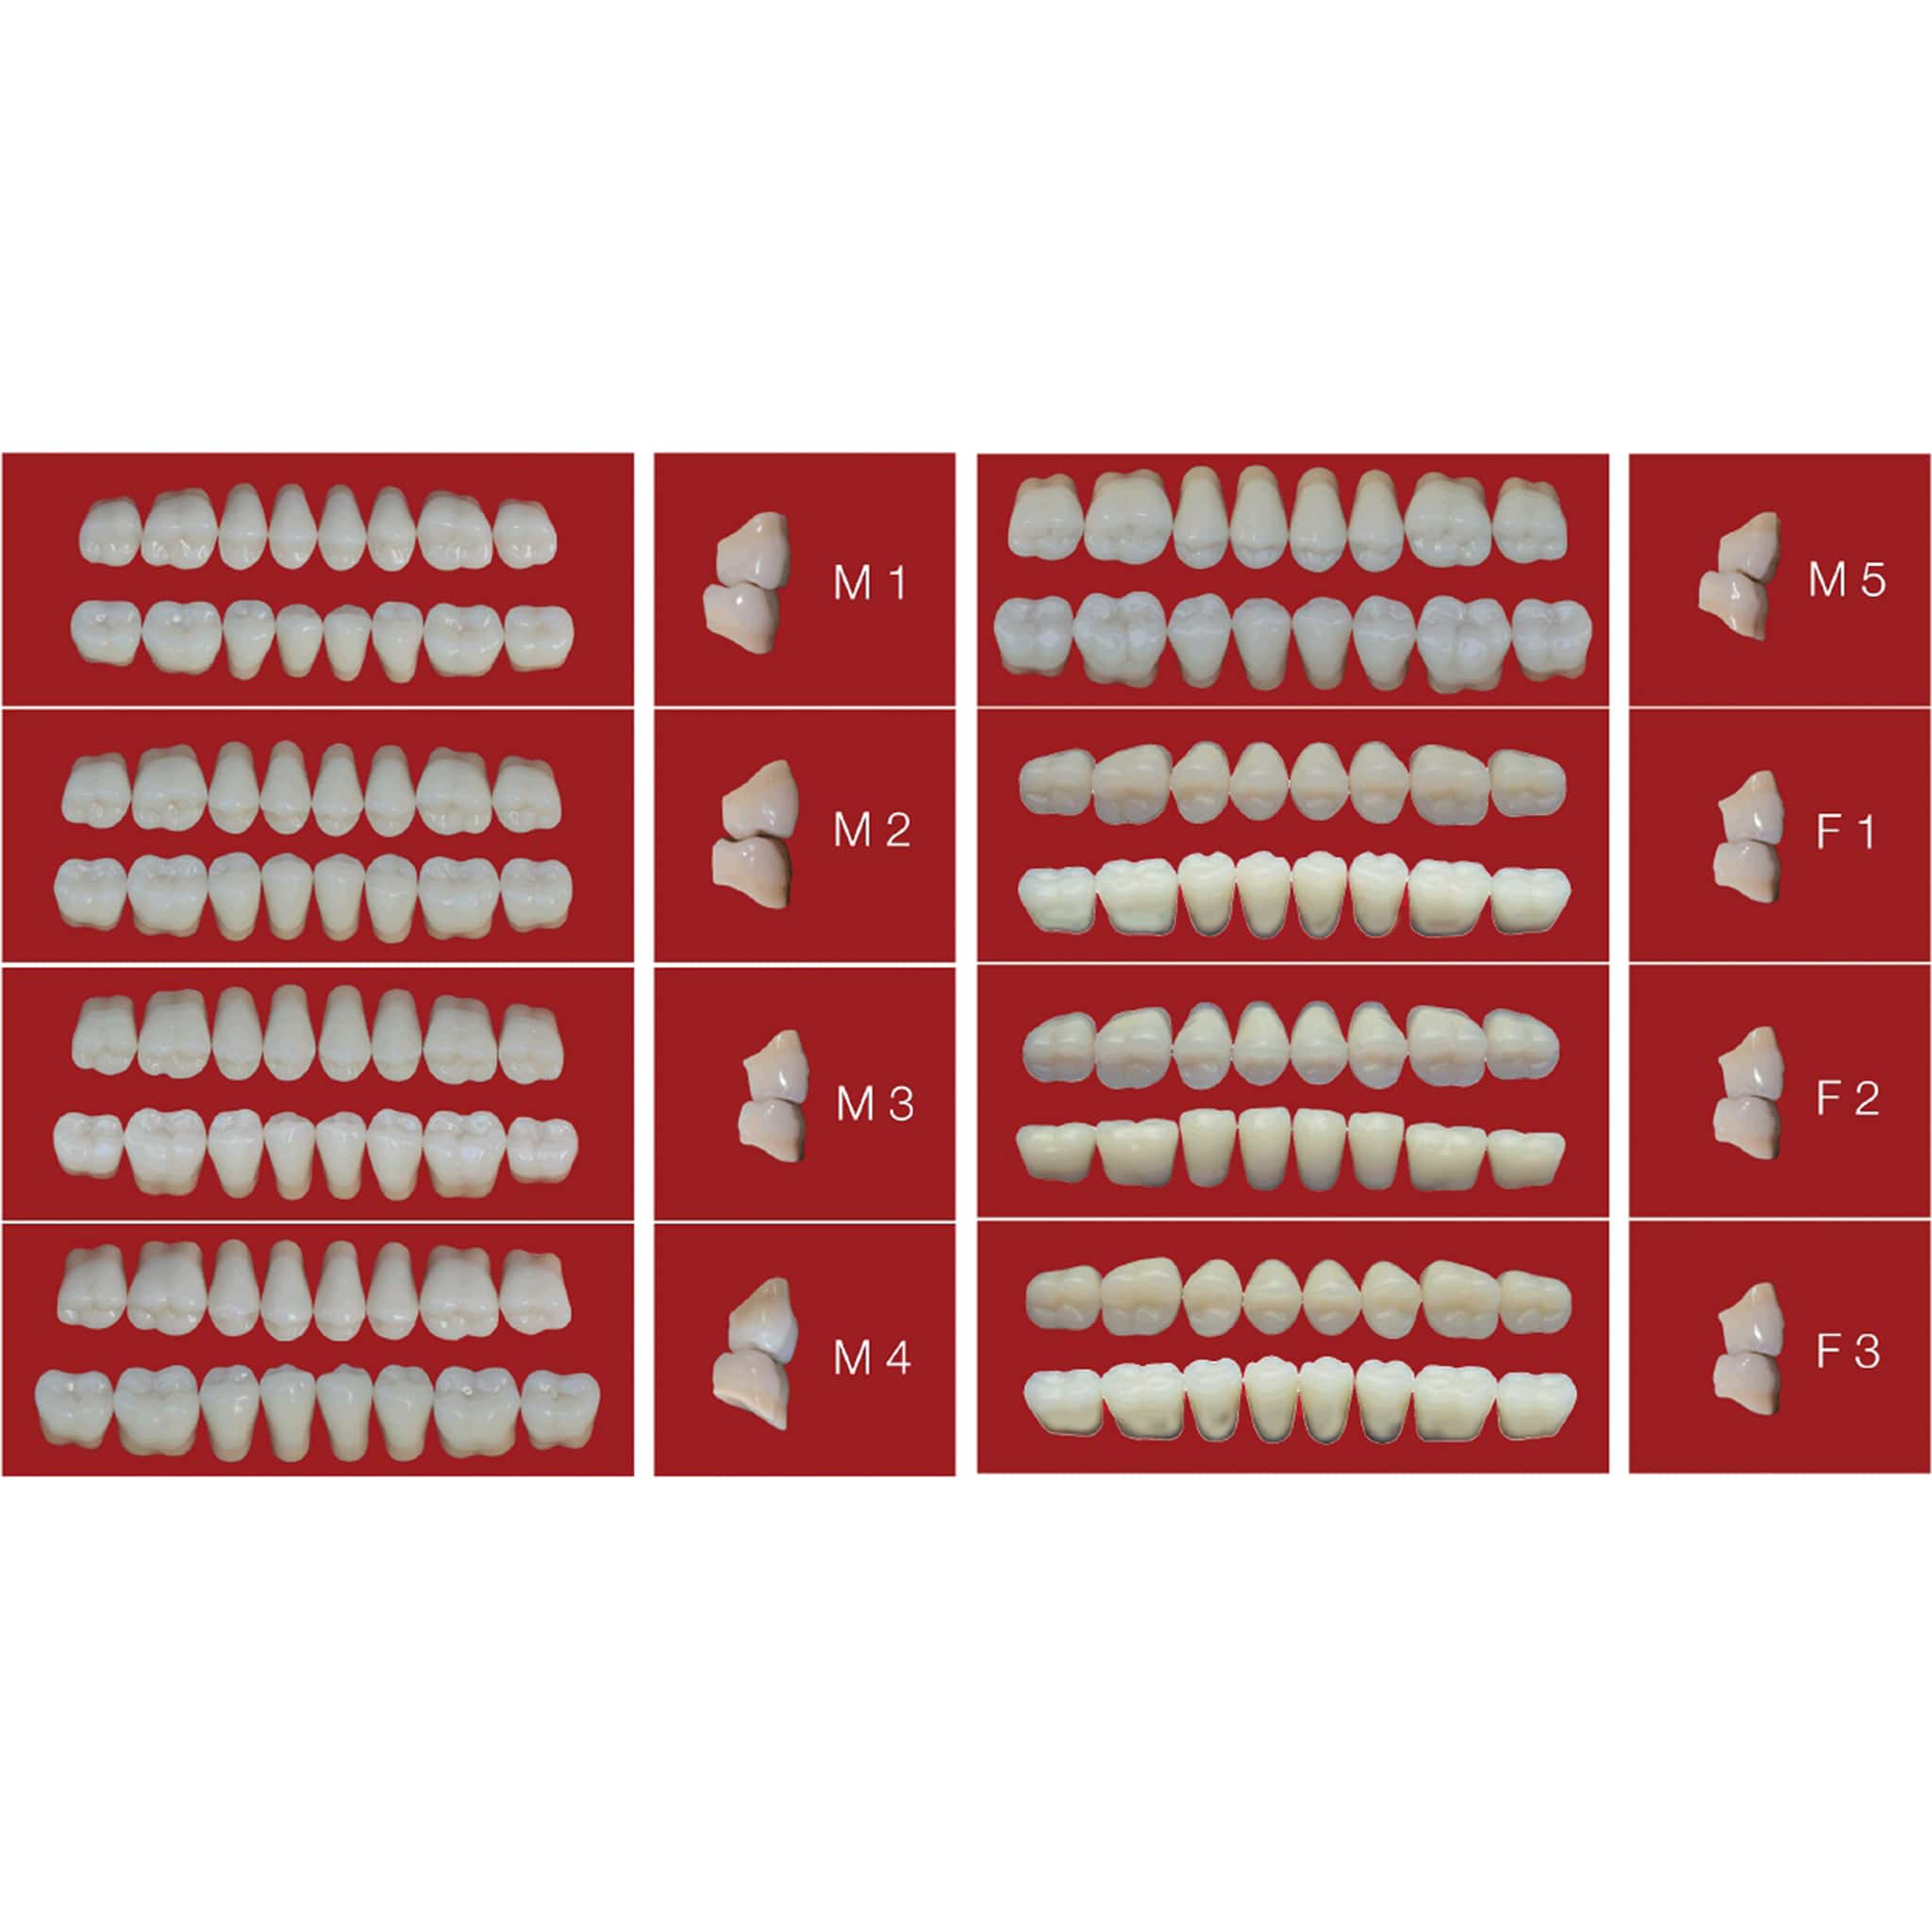 MR Dental Medi-Lux Full Set A3 Shade (Box of 4)